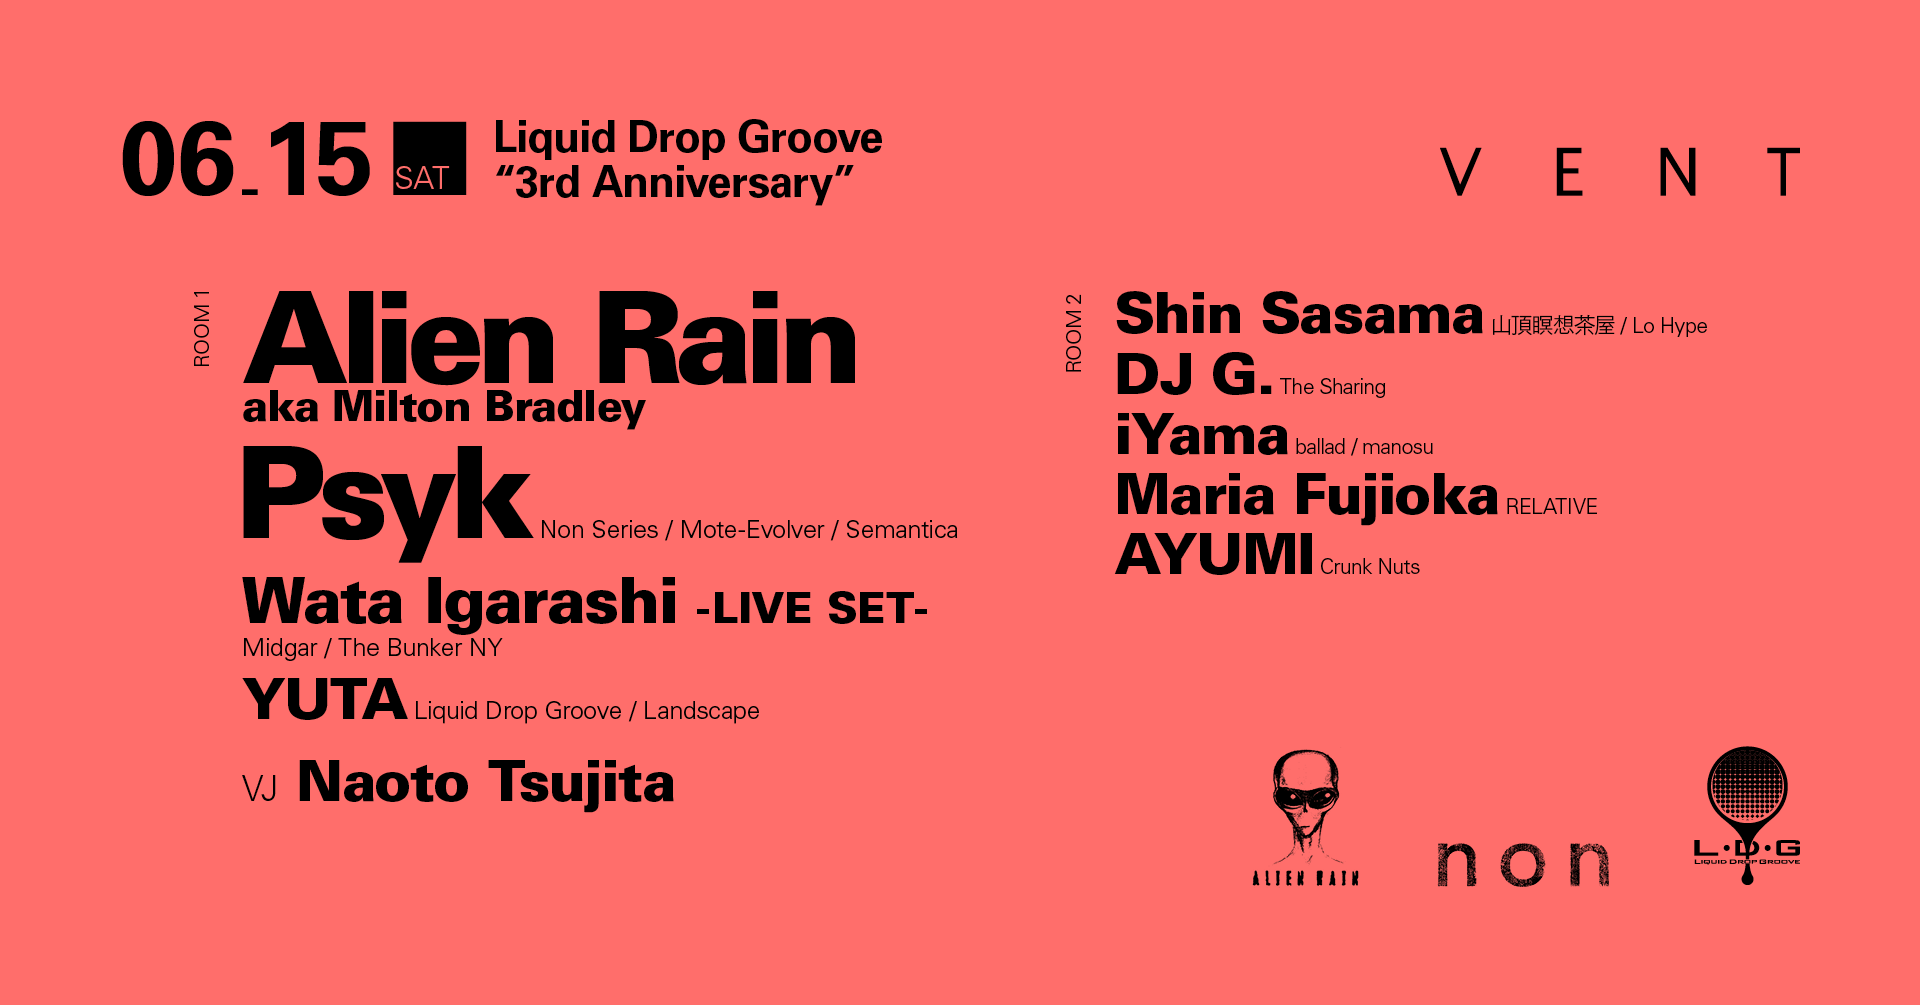 Alien Rain and Psyk at Liquid Drop Groove “3rd Anniversary” 